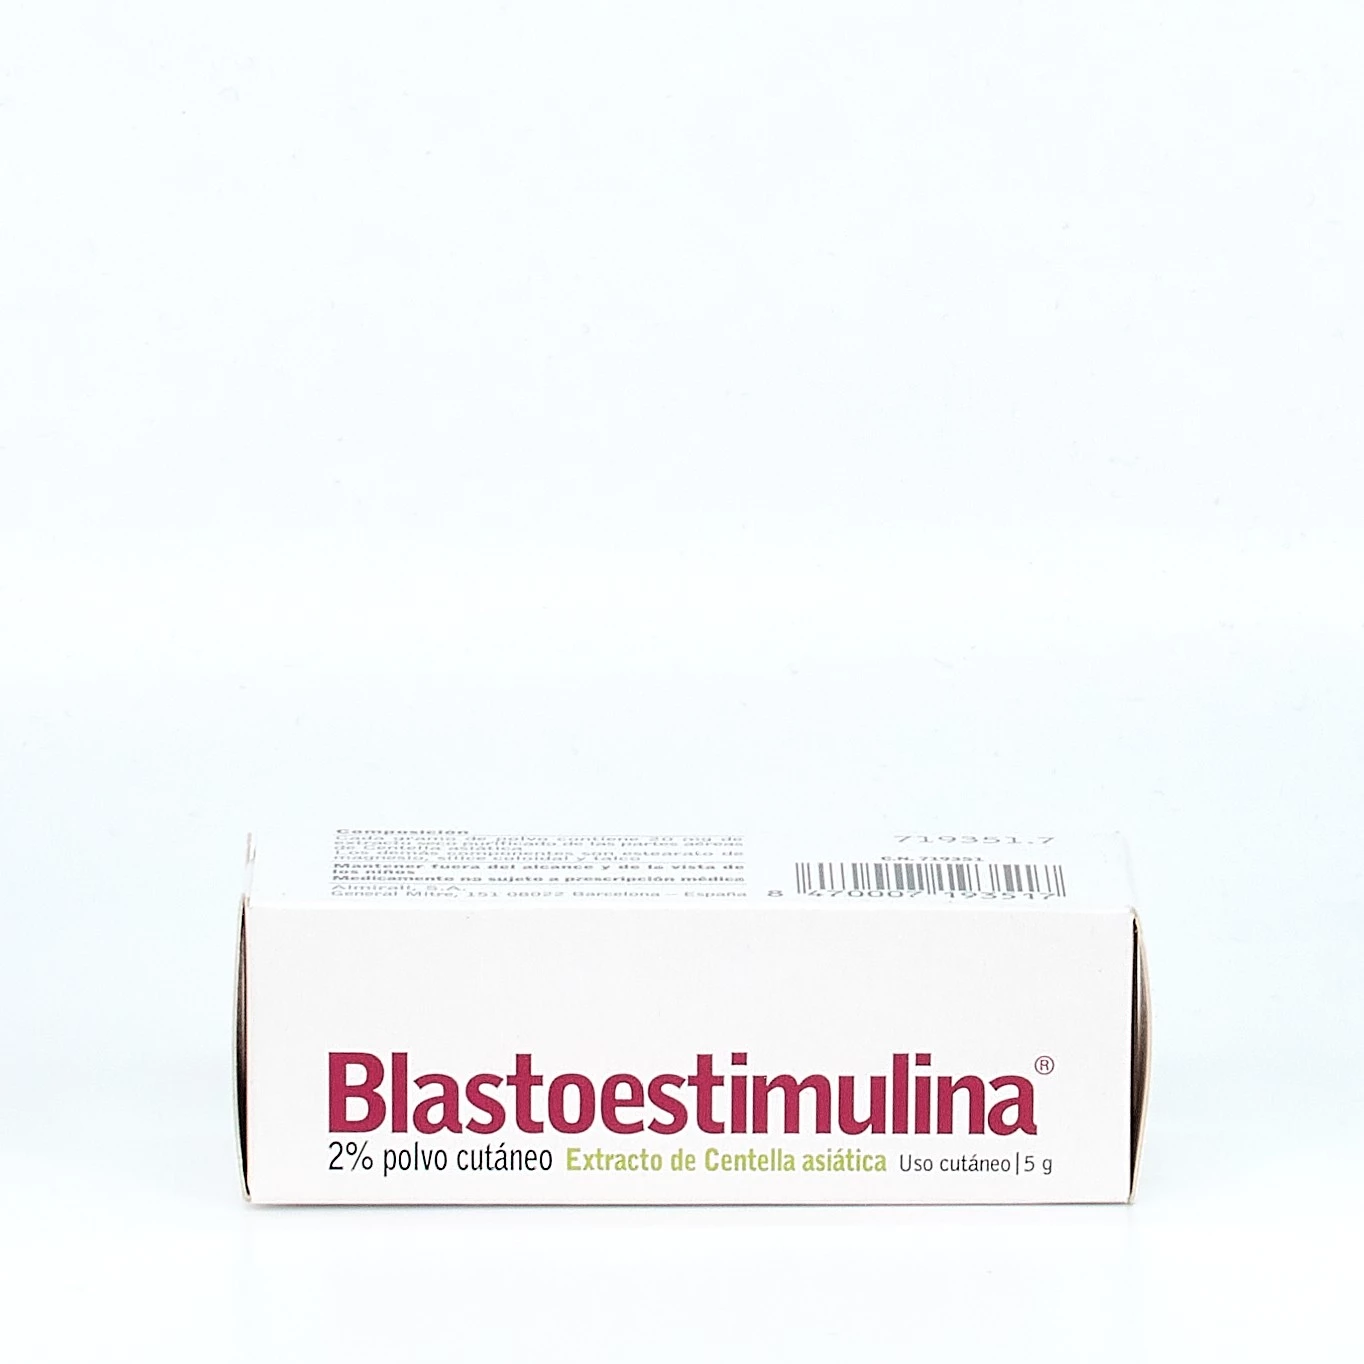 Blastoestimulina 2% polvo cutáneo